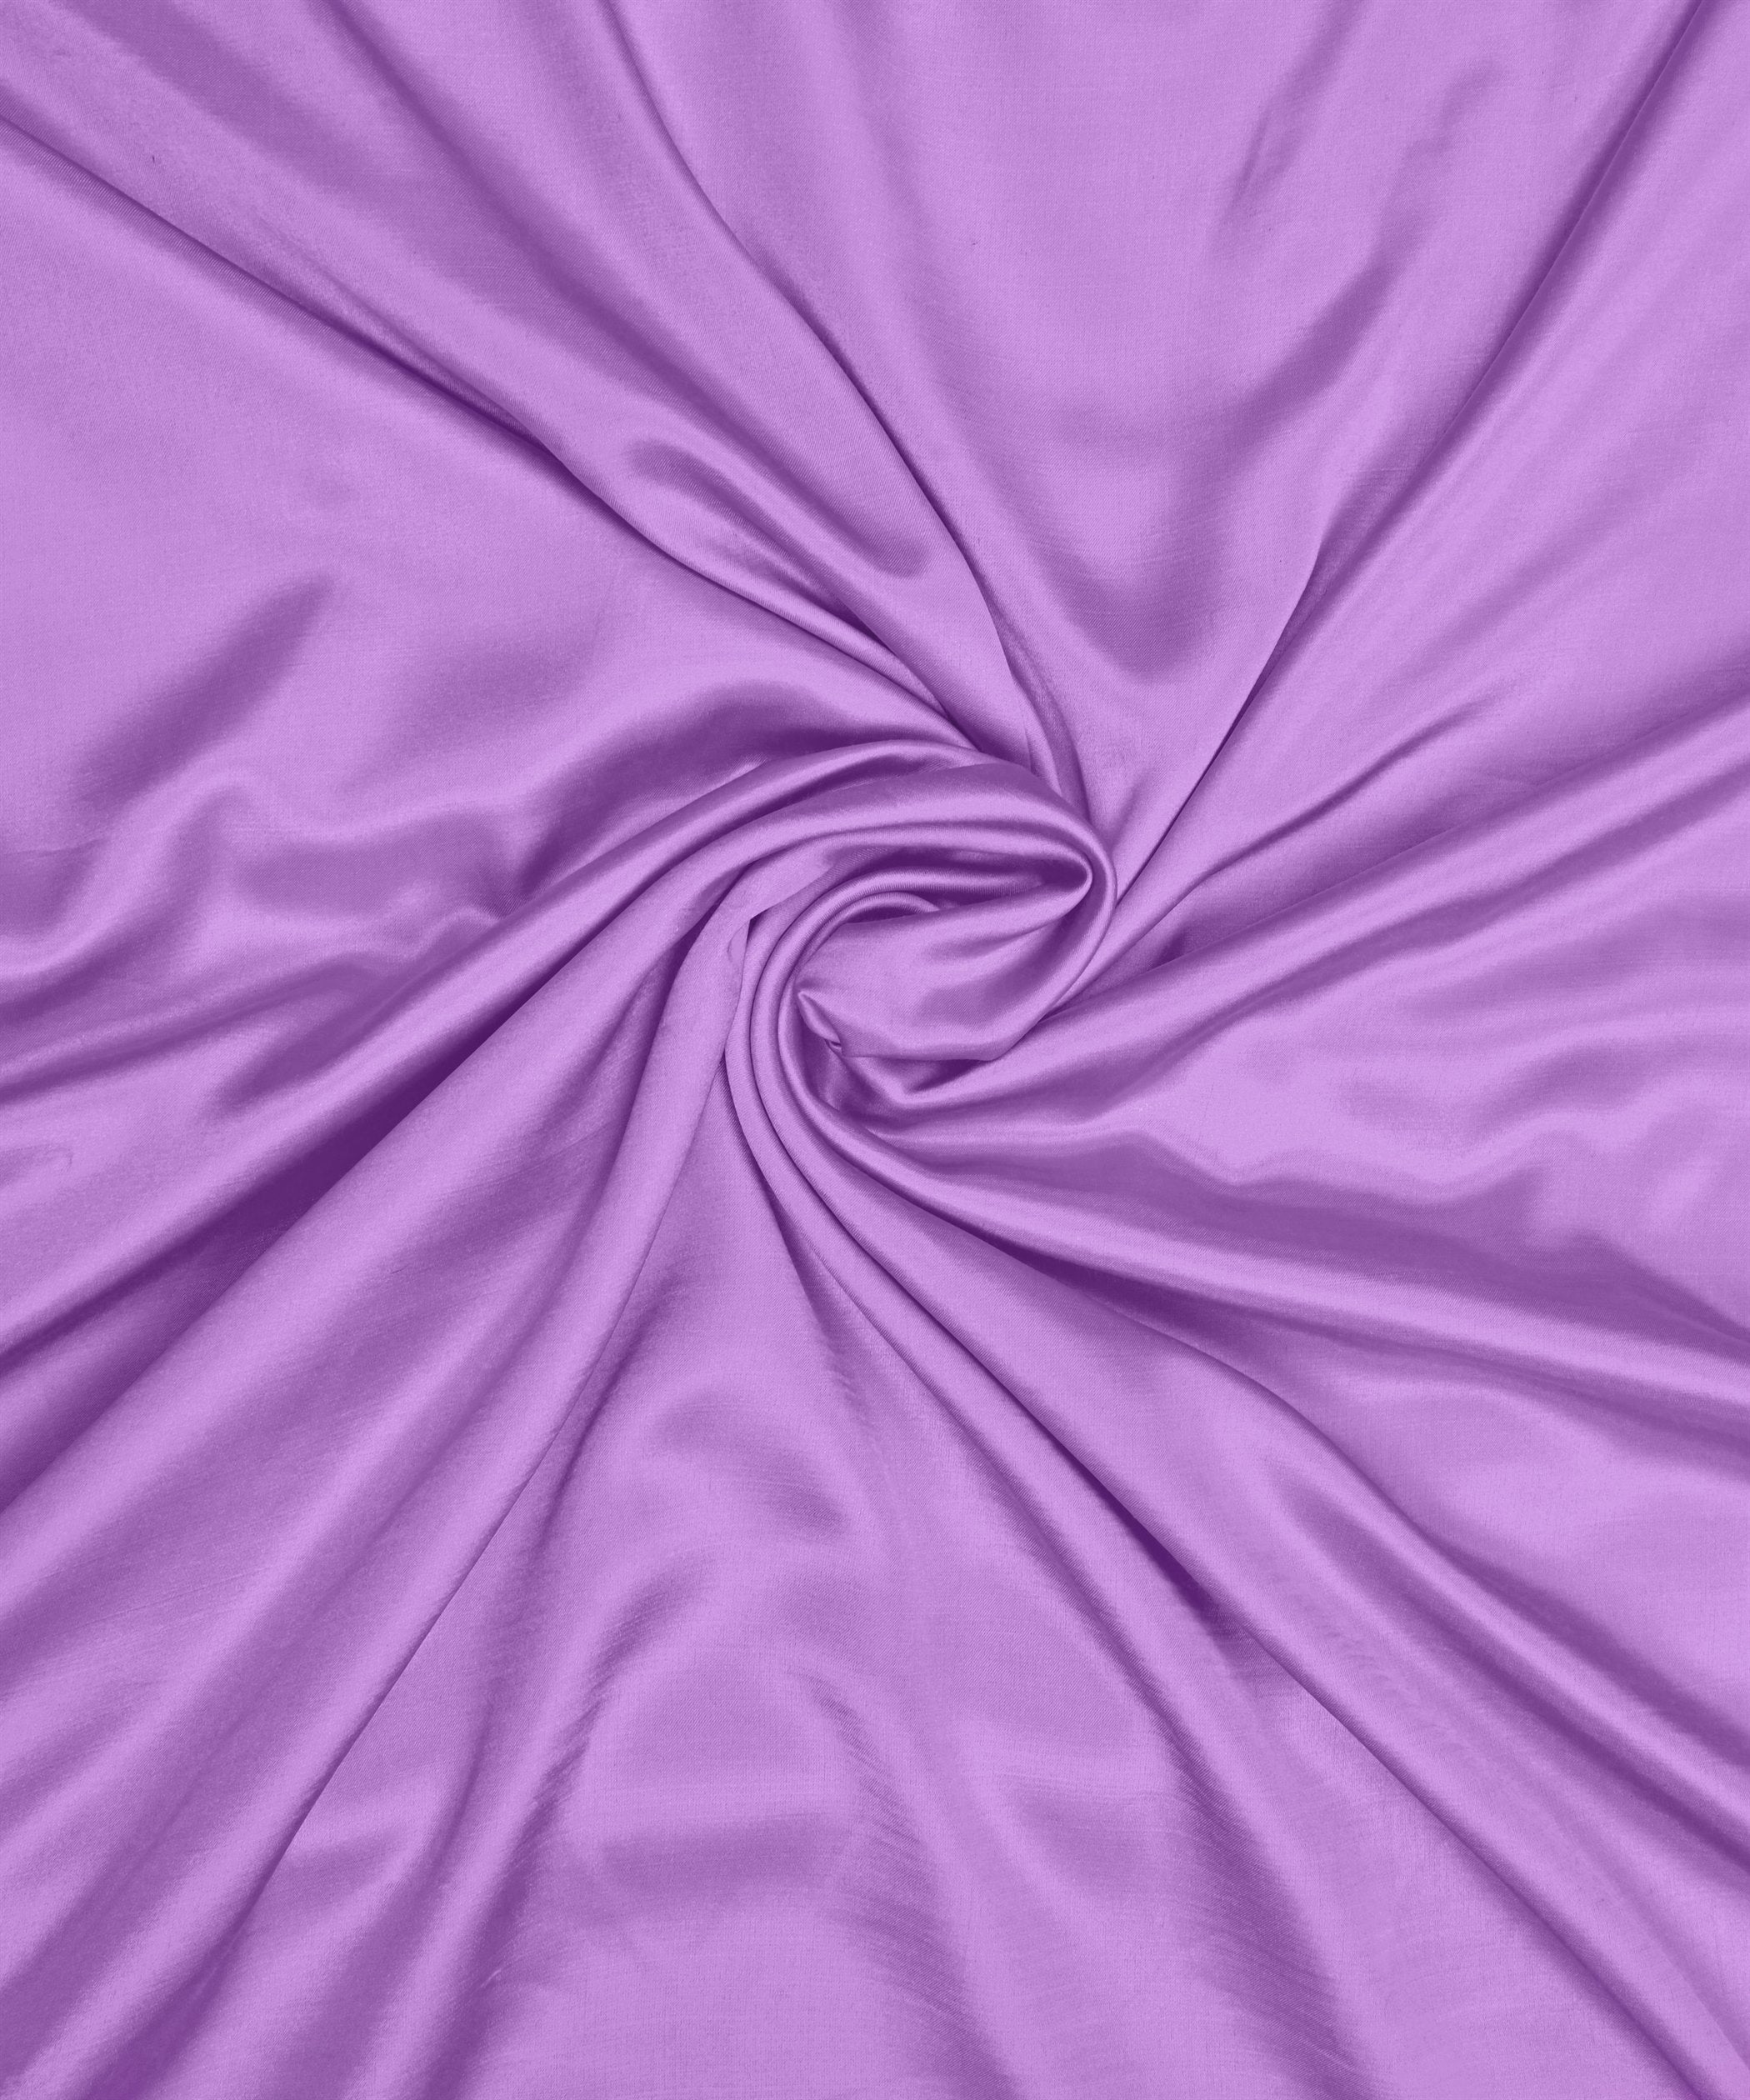 Dark Lavender Plain Dyed Modal Satin Fabric